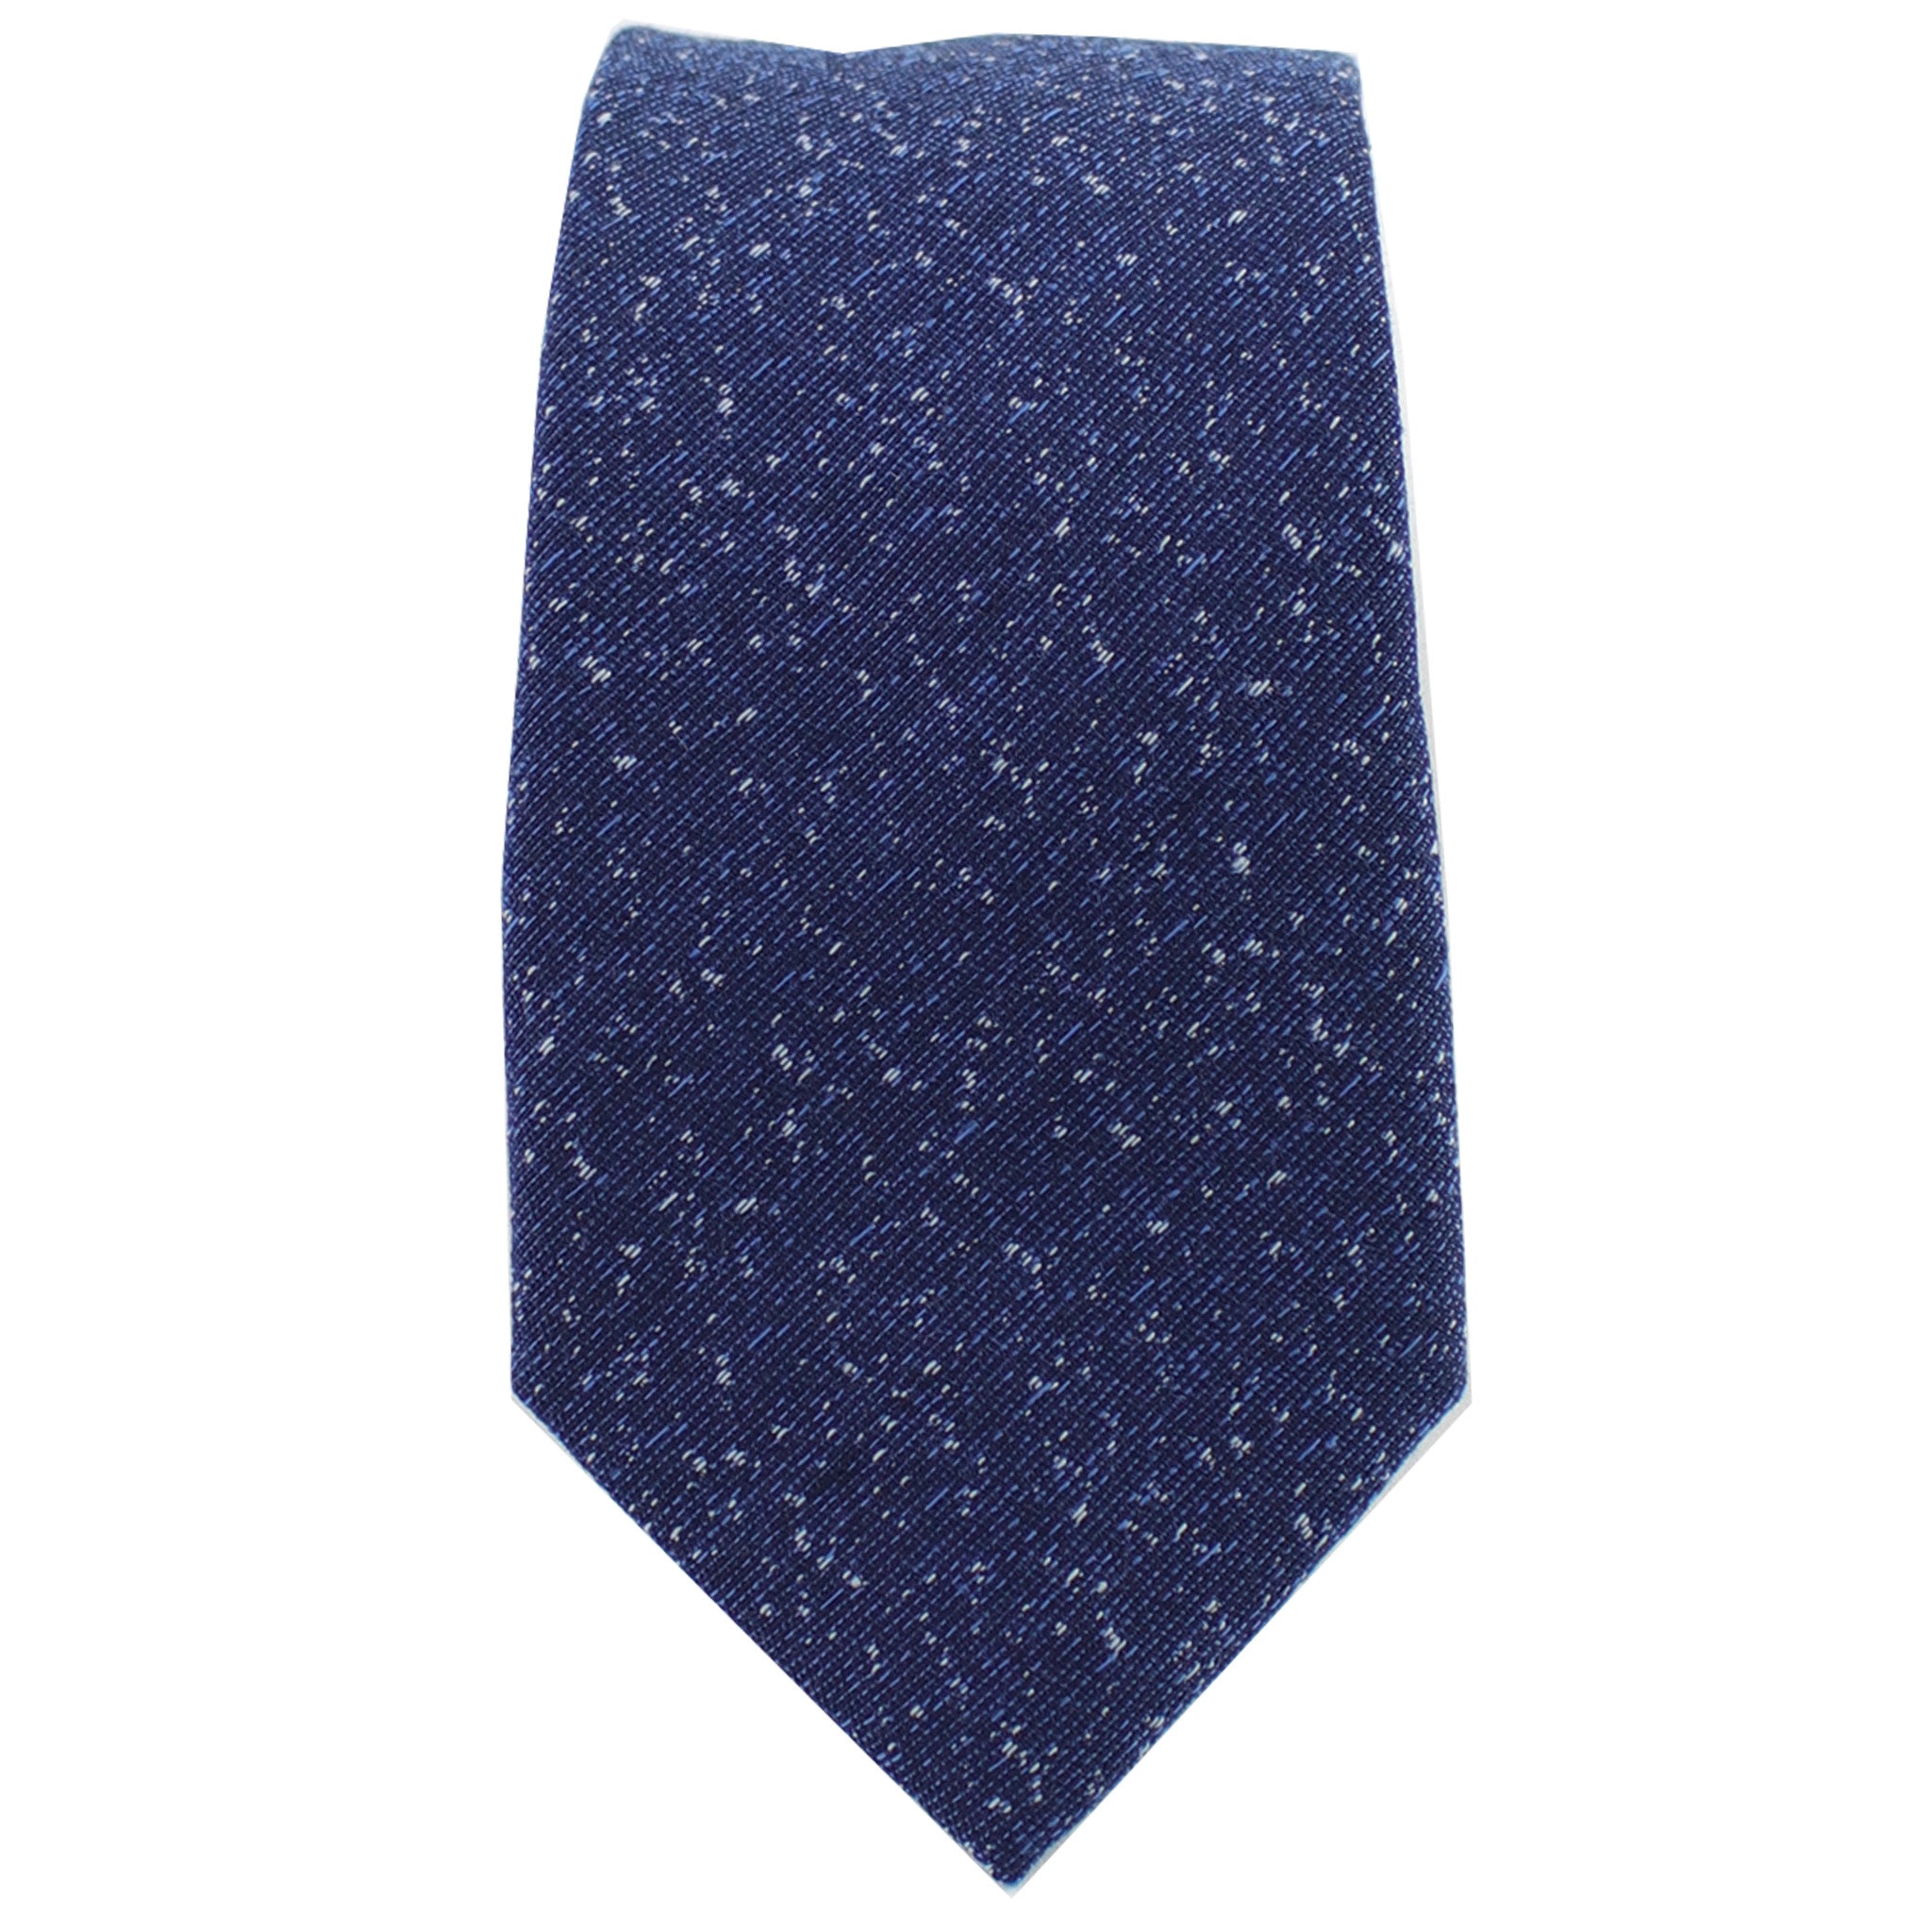 Navy Speck Tie from DIBI